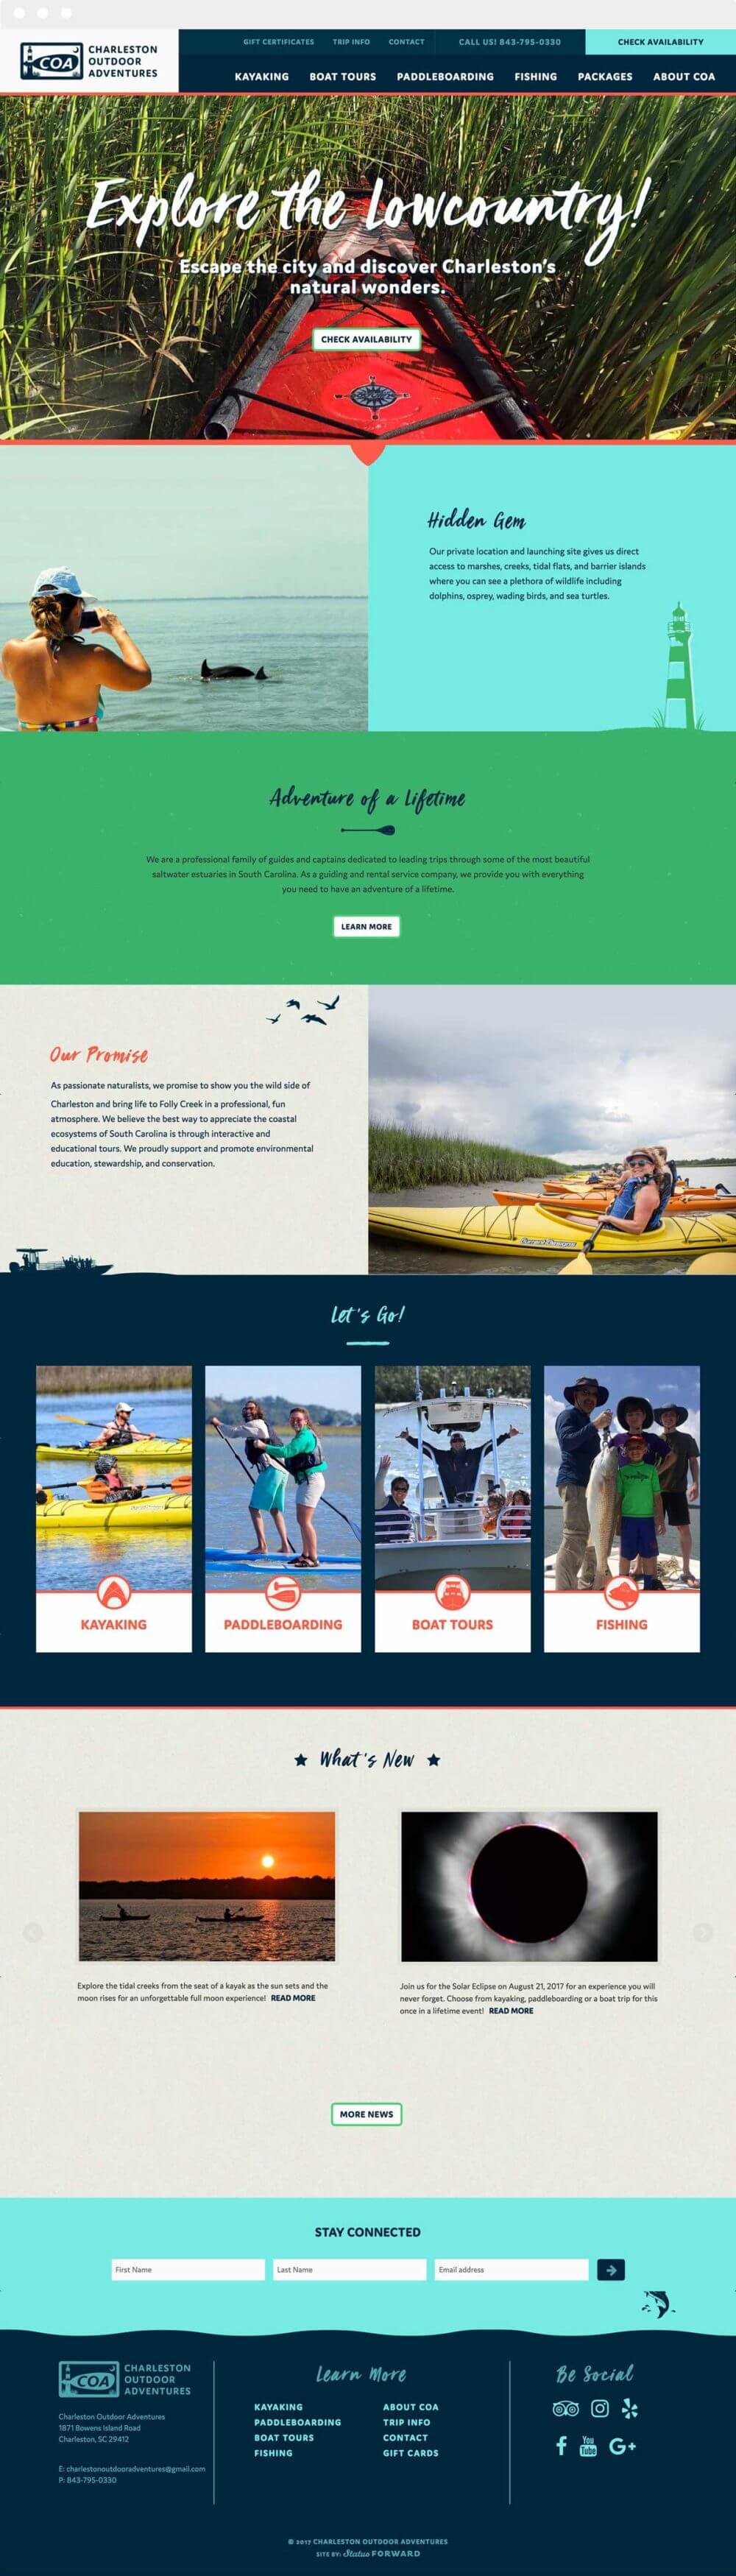 Charleston Outdoor Adventures website home page design